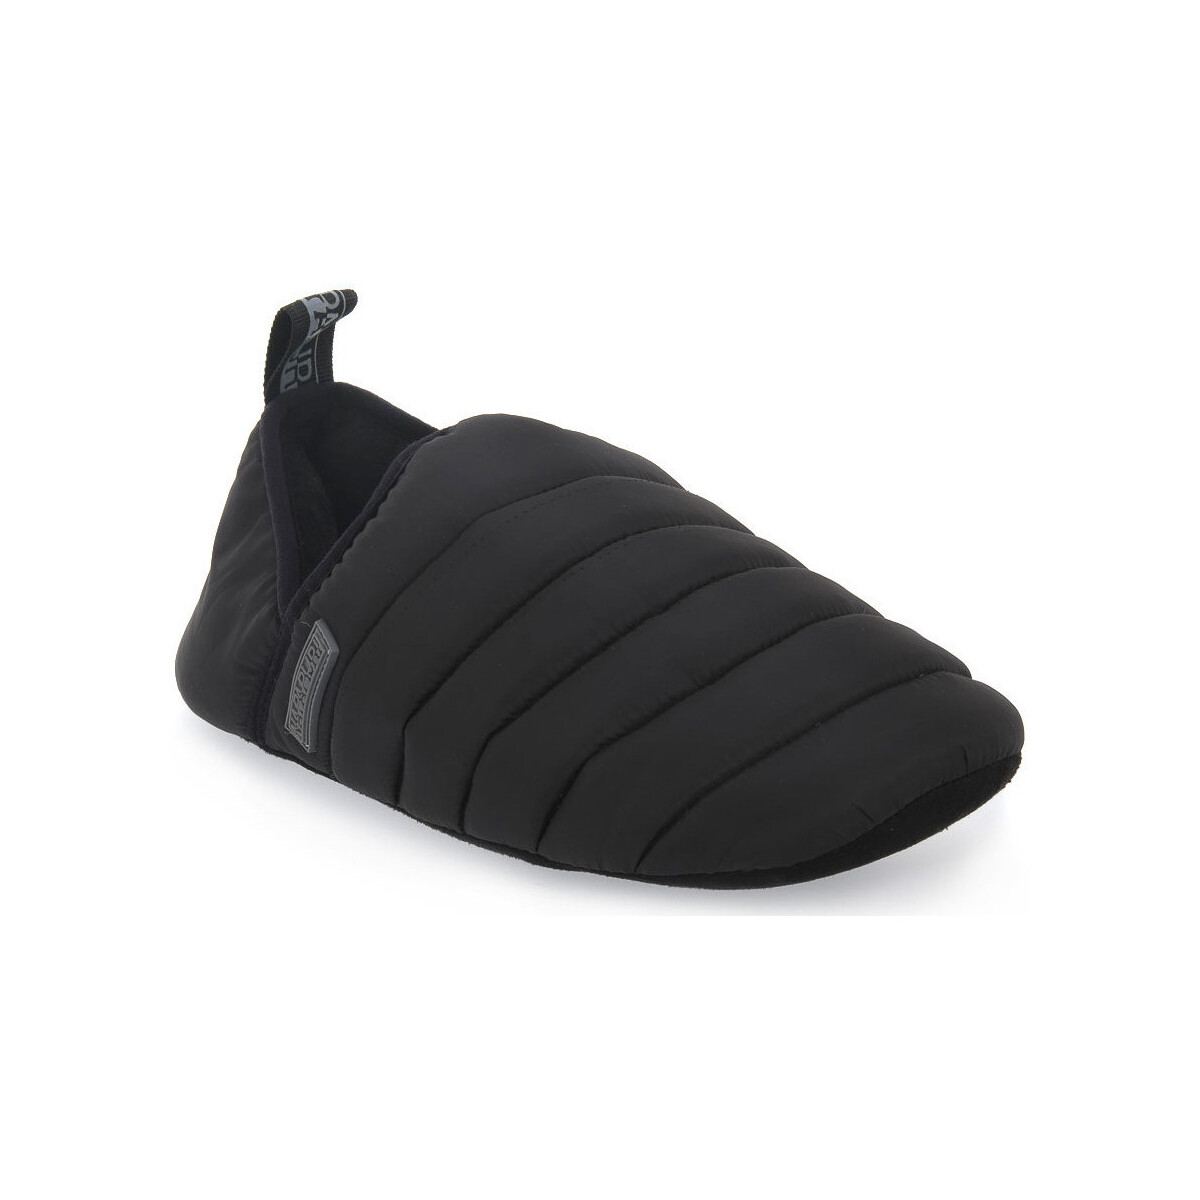 Zapatos Hombre Zuecos (Mules) Napapijri 041 BLACK Negro